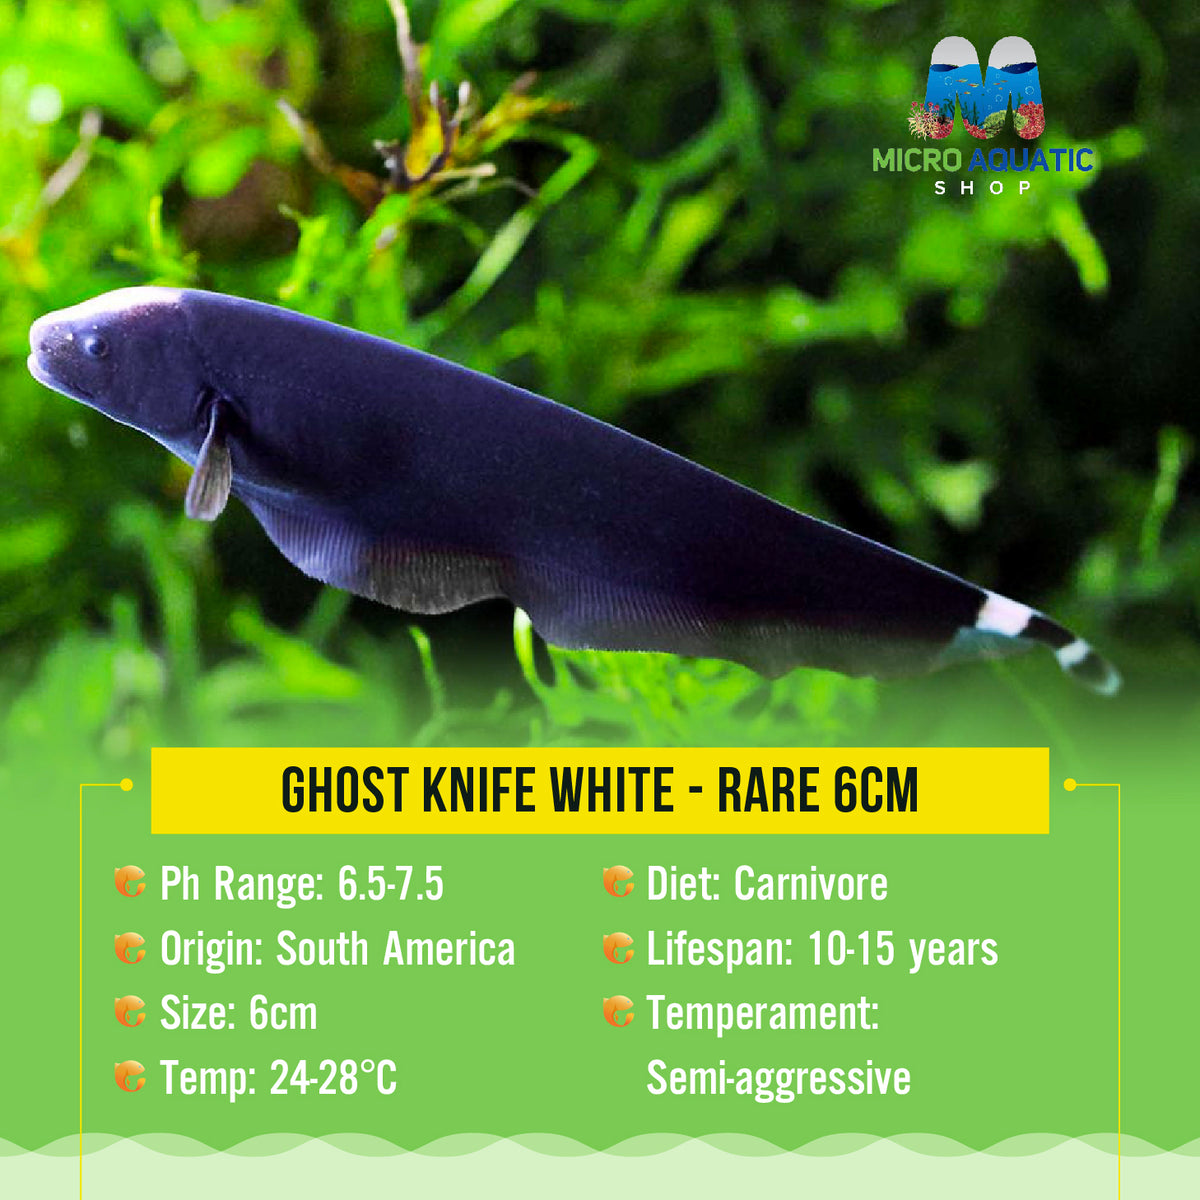 Ghost Knife White - Rare 6cm